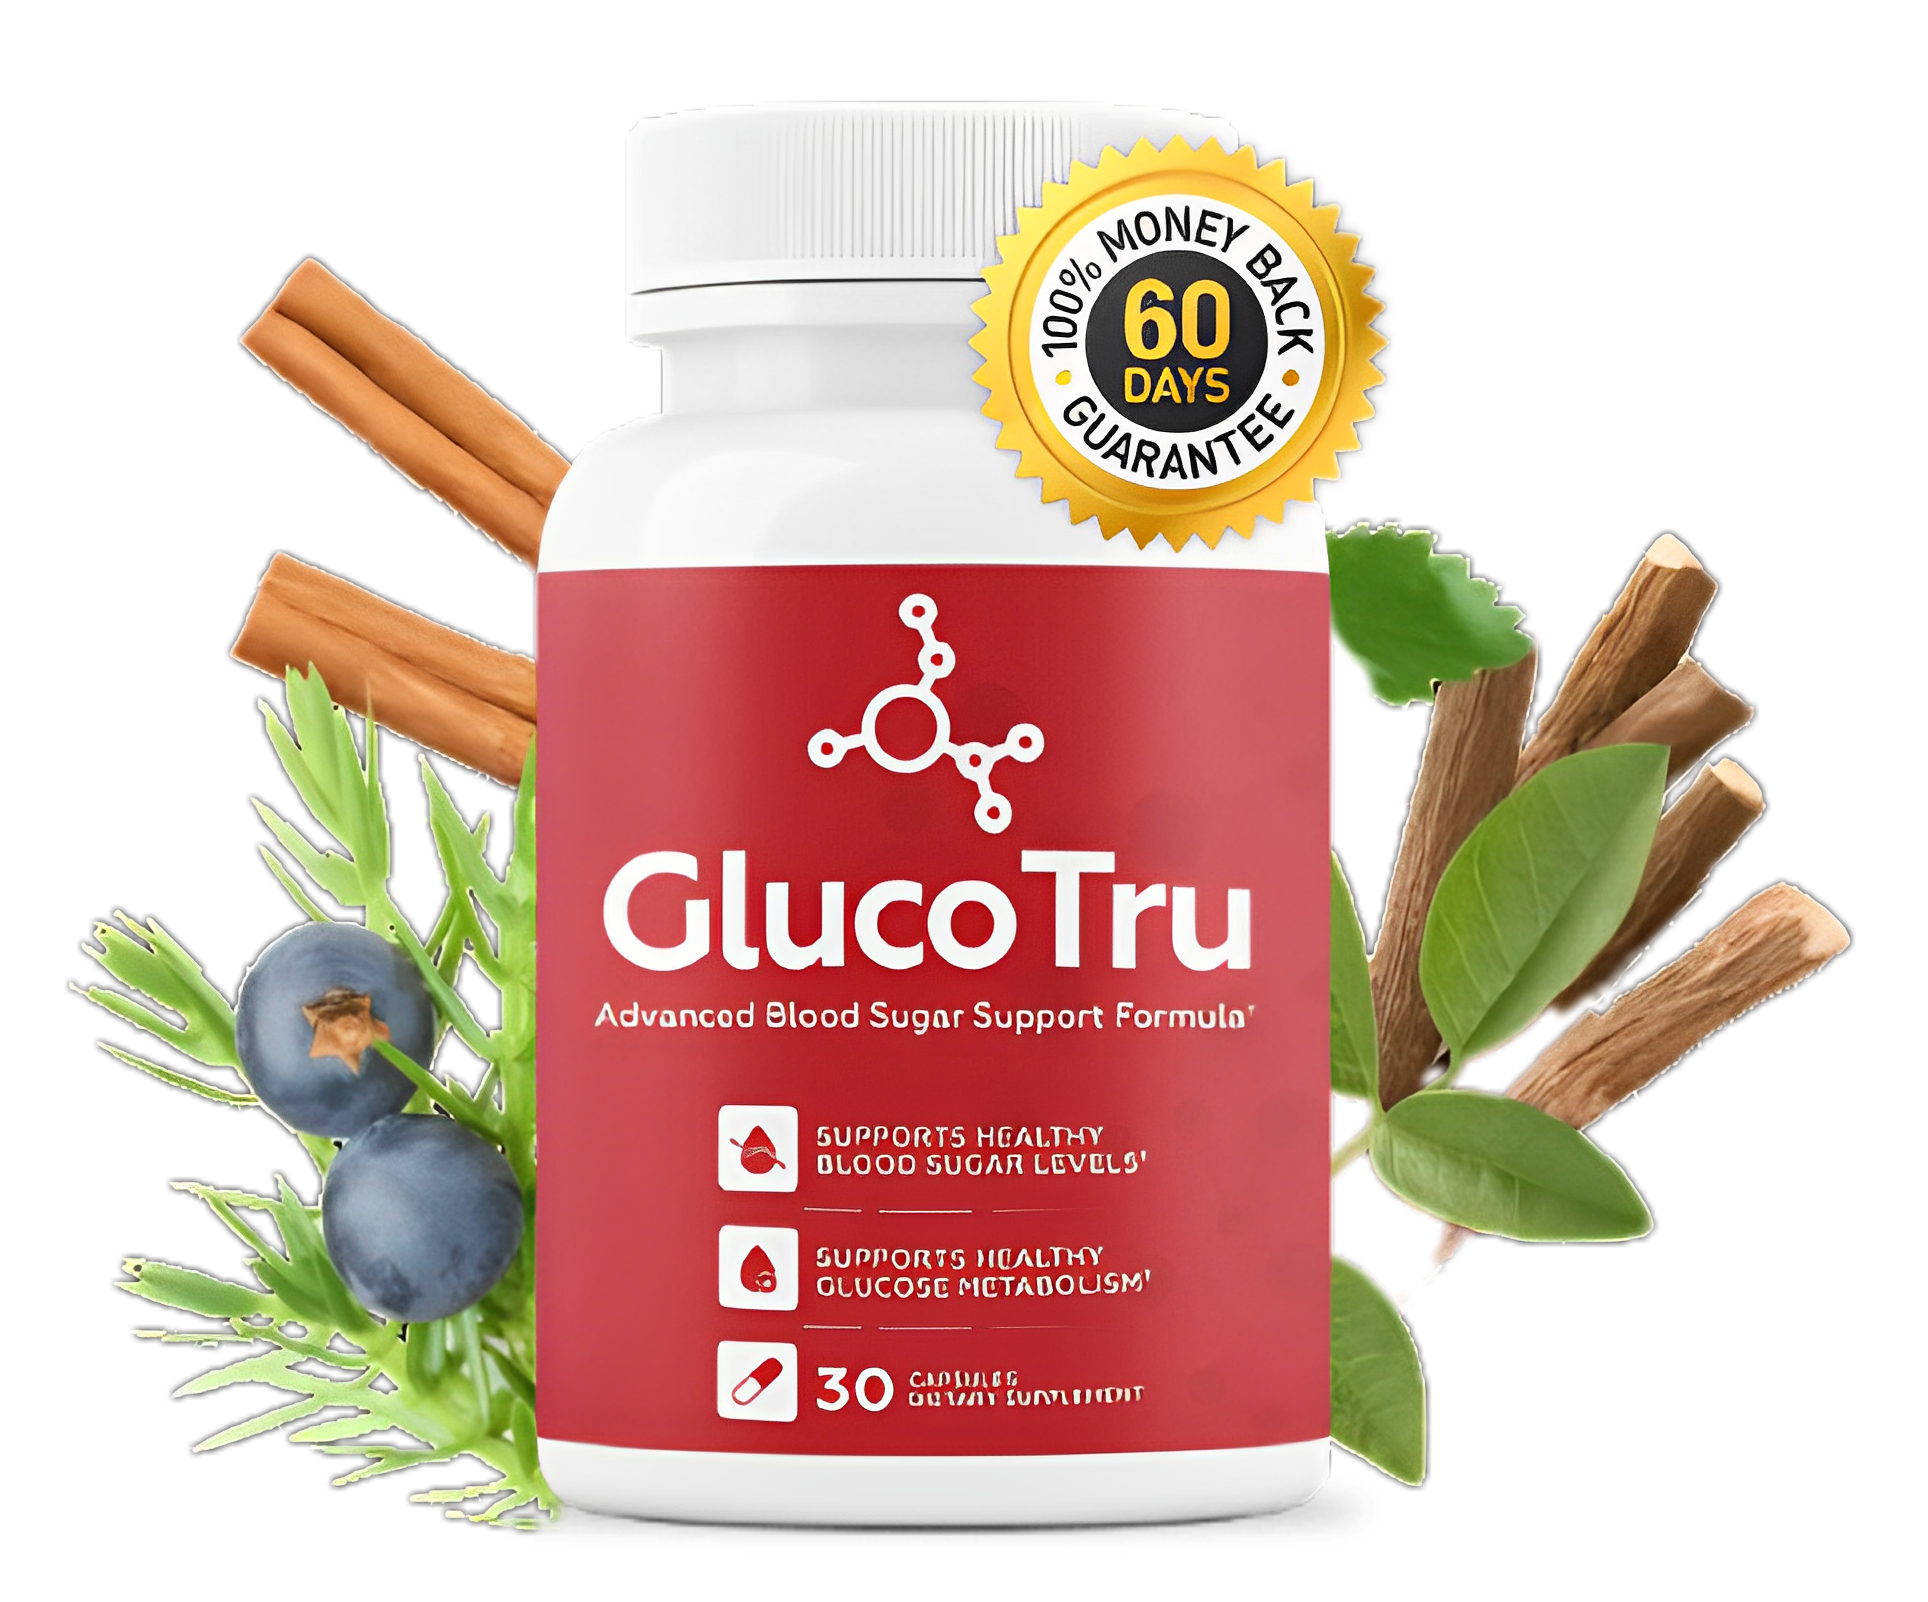 Glucotru blood glucose level tracking tool